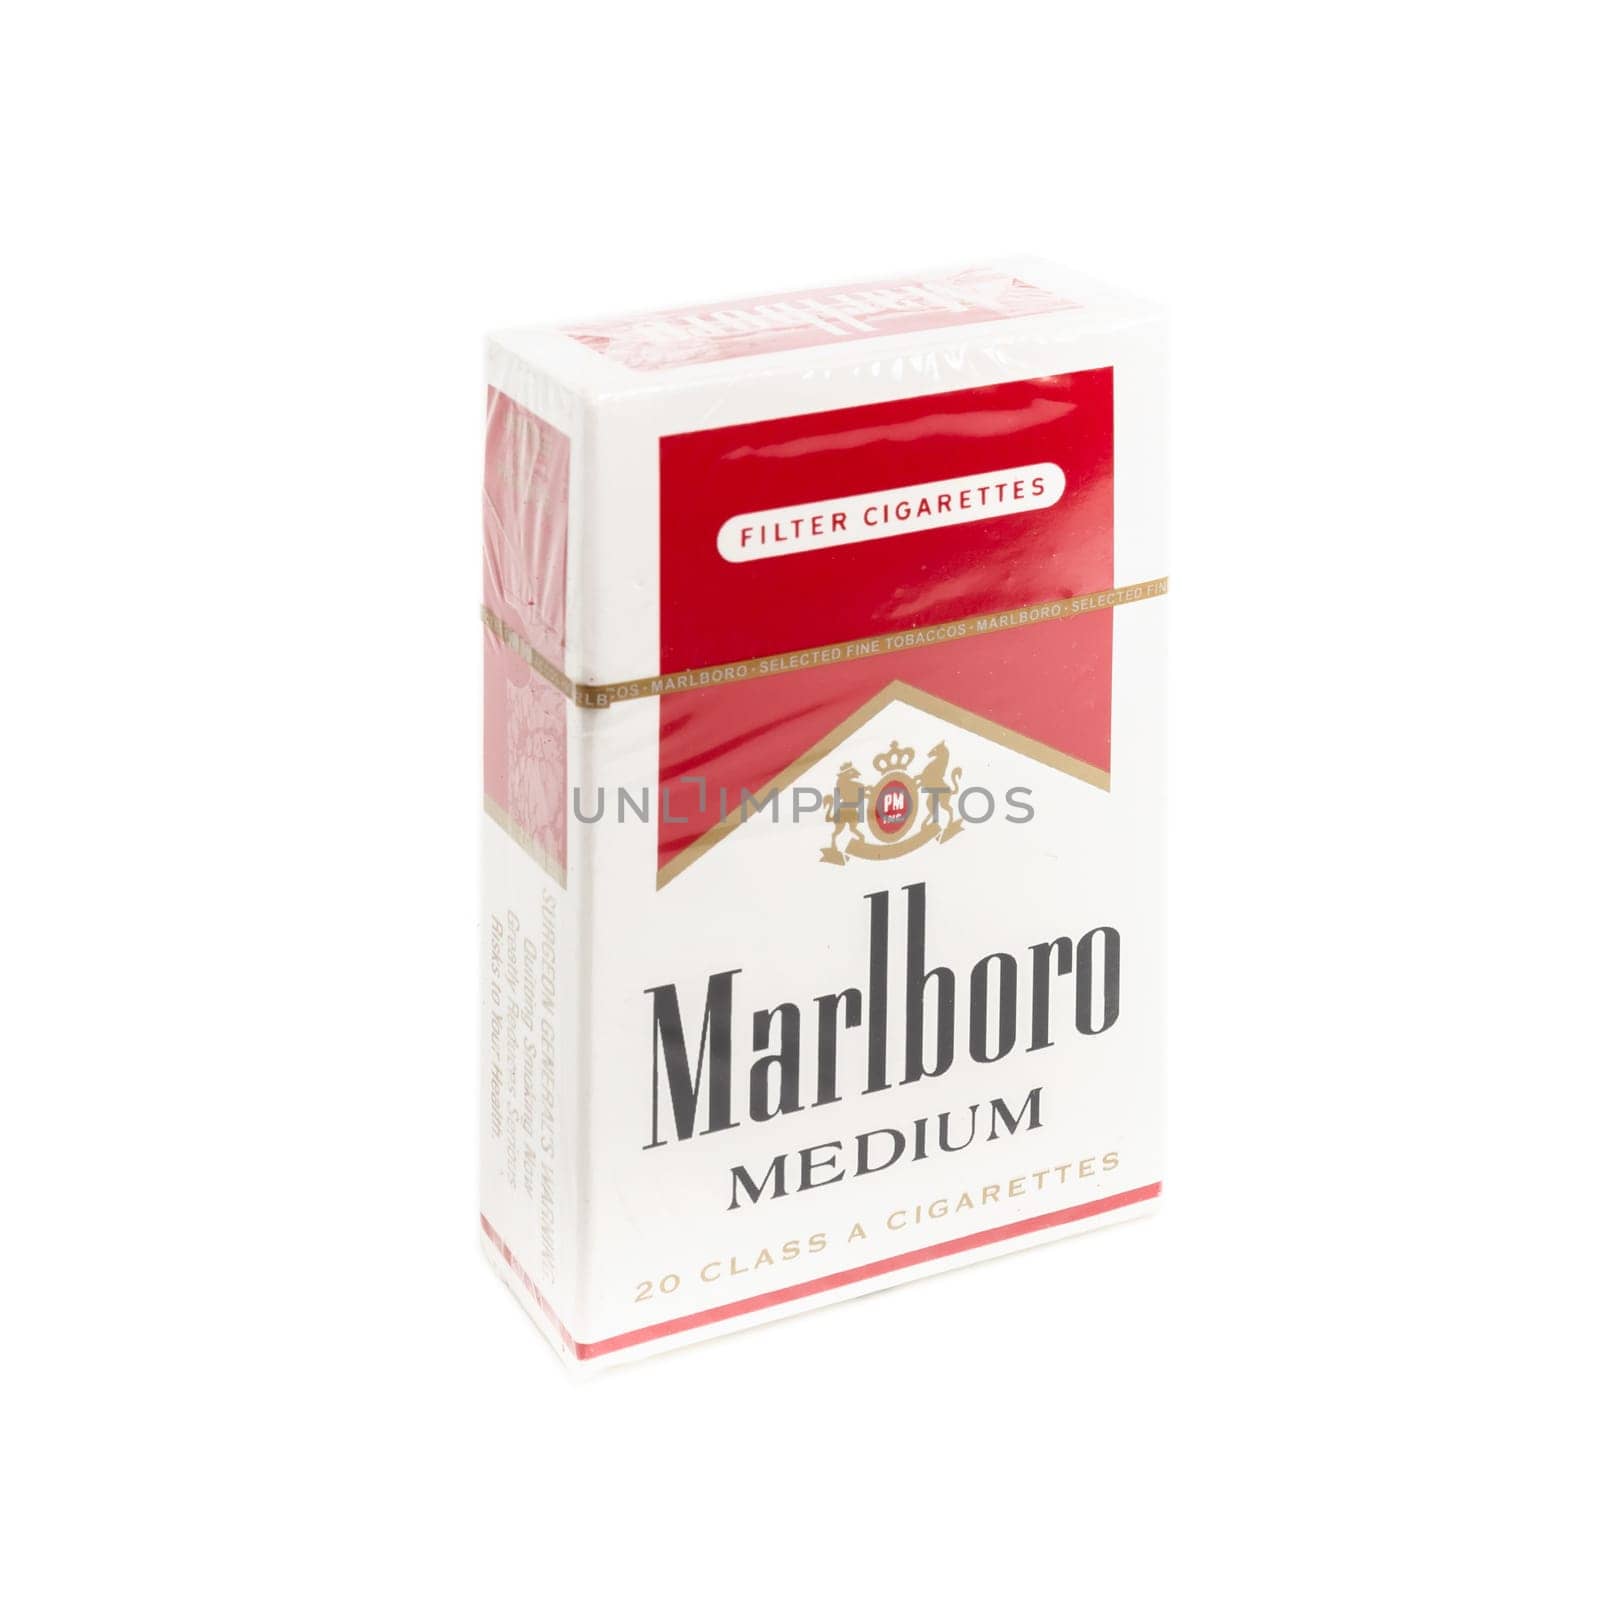 Pack of Marlboro Cigarettes by germanopoli